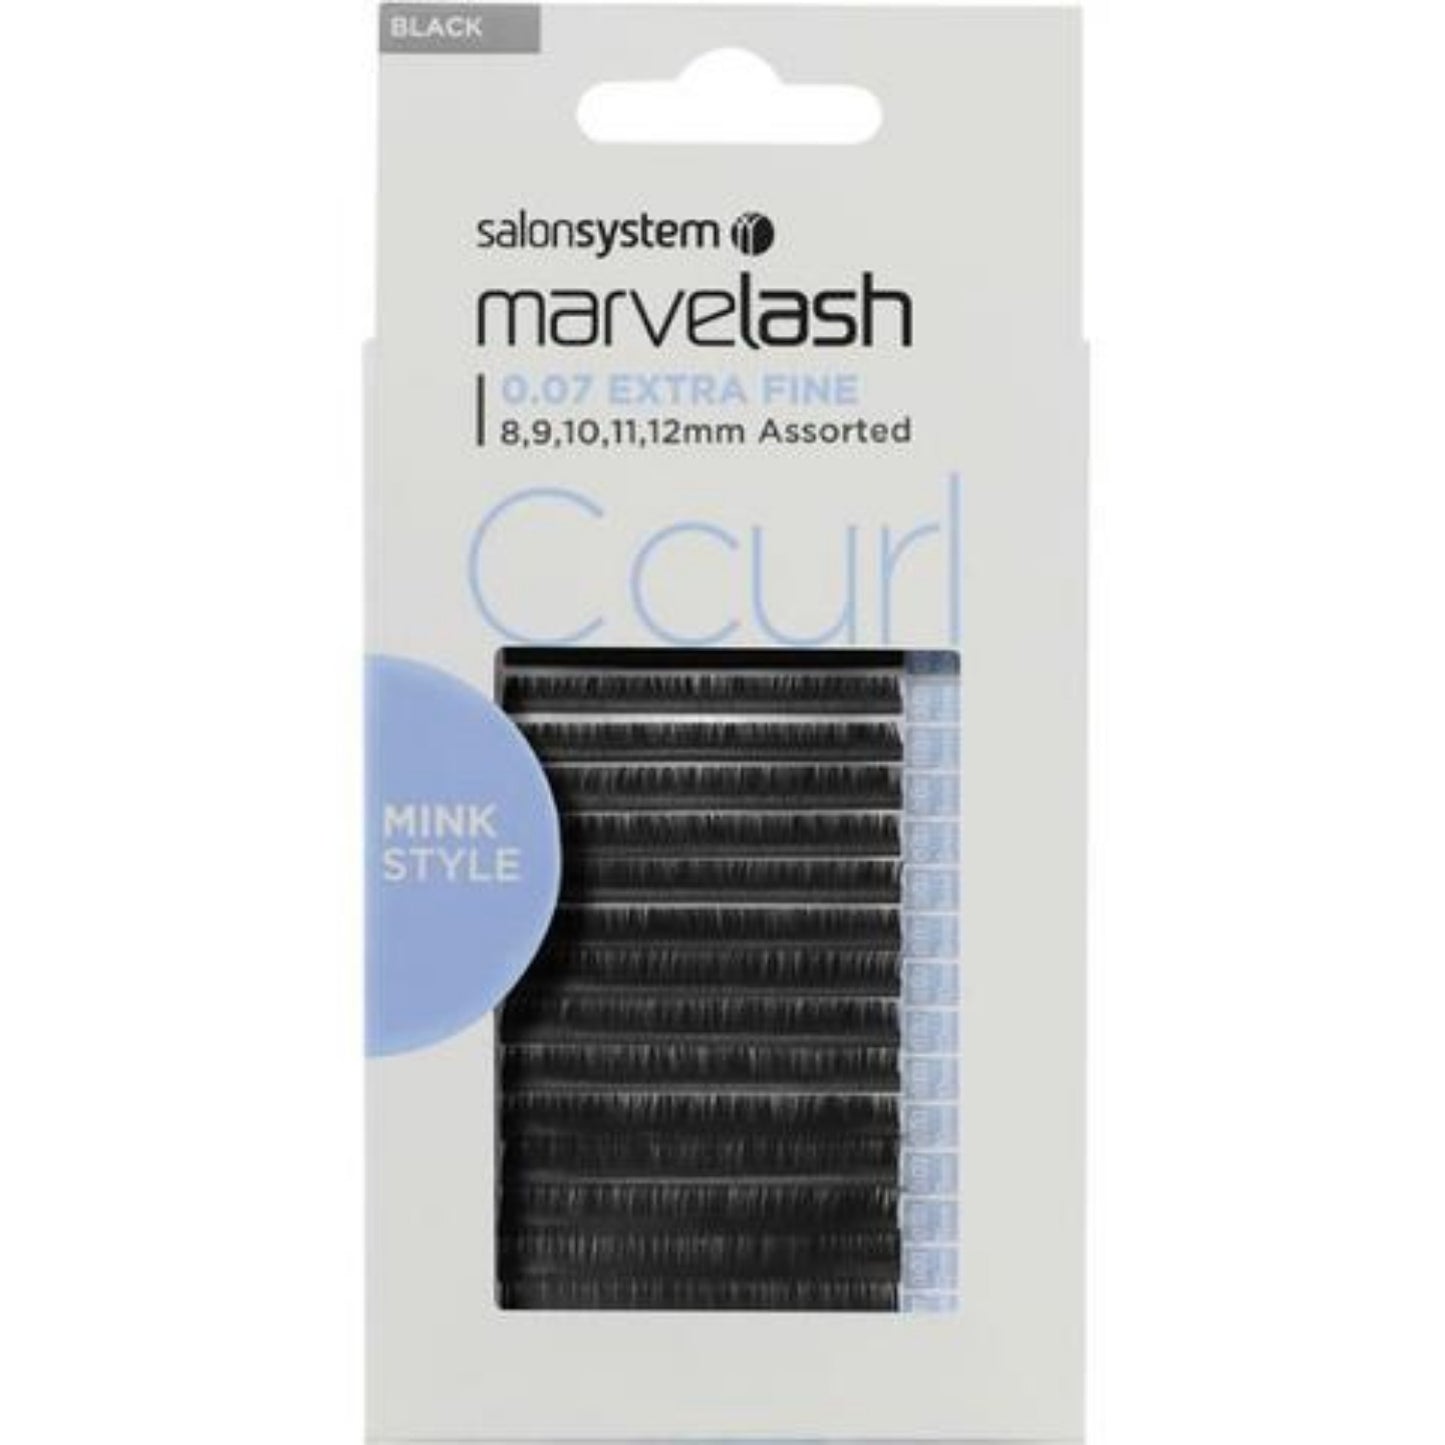 Salon System Marvelash C Curl Lashes 0.07 Extra Fine Mink Style, Assorted Length (8, 9, 10, 11, 12mm) False Strip Lashes